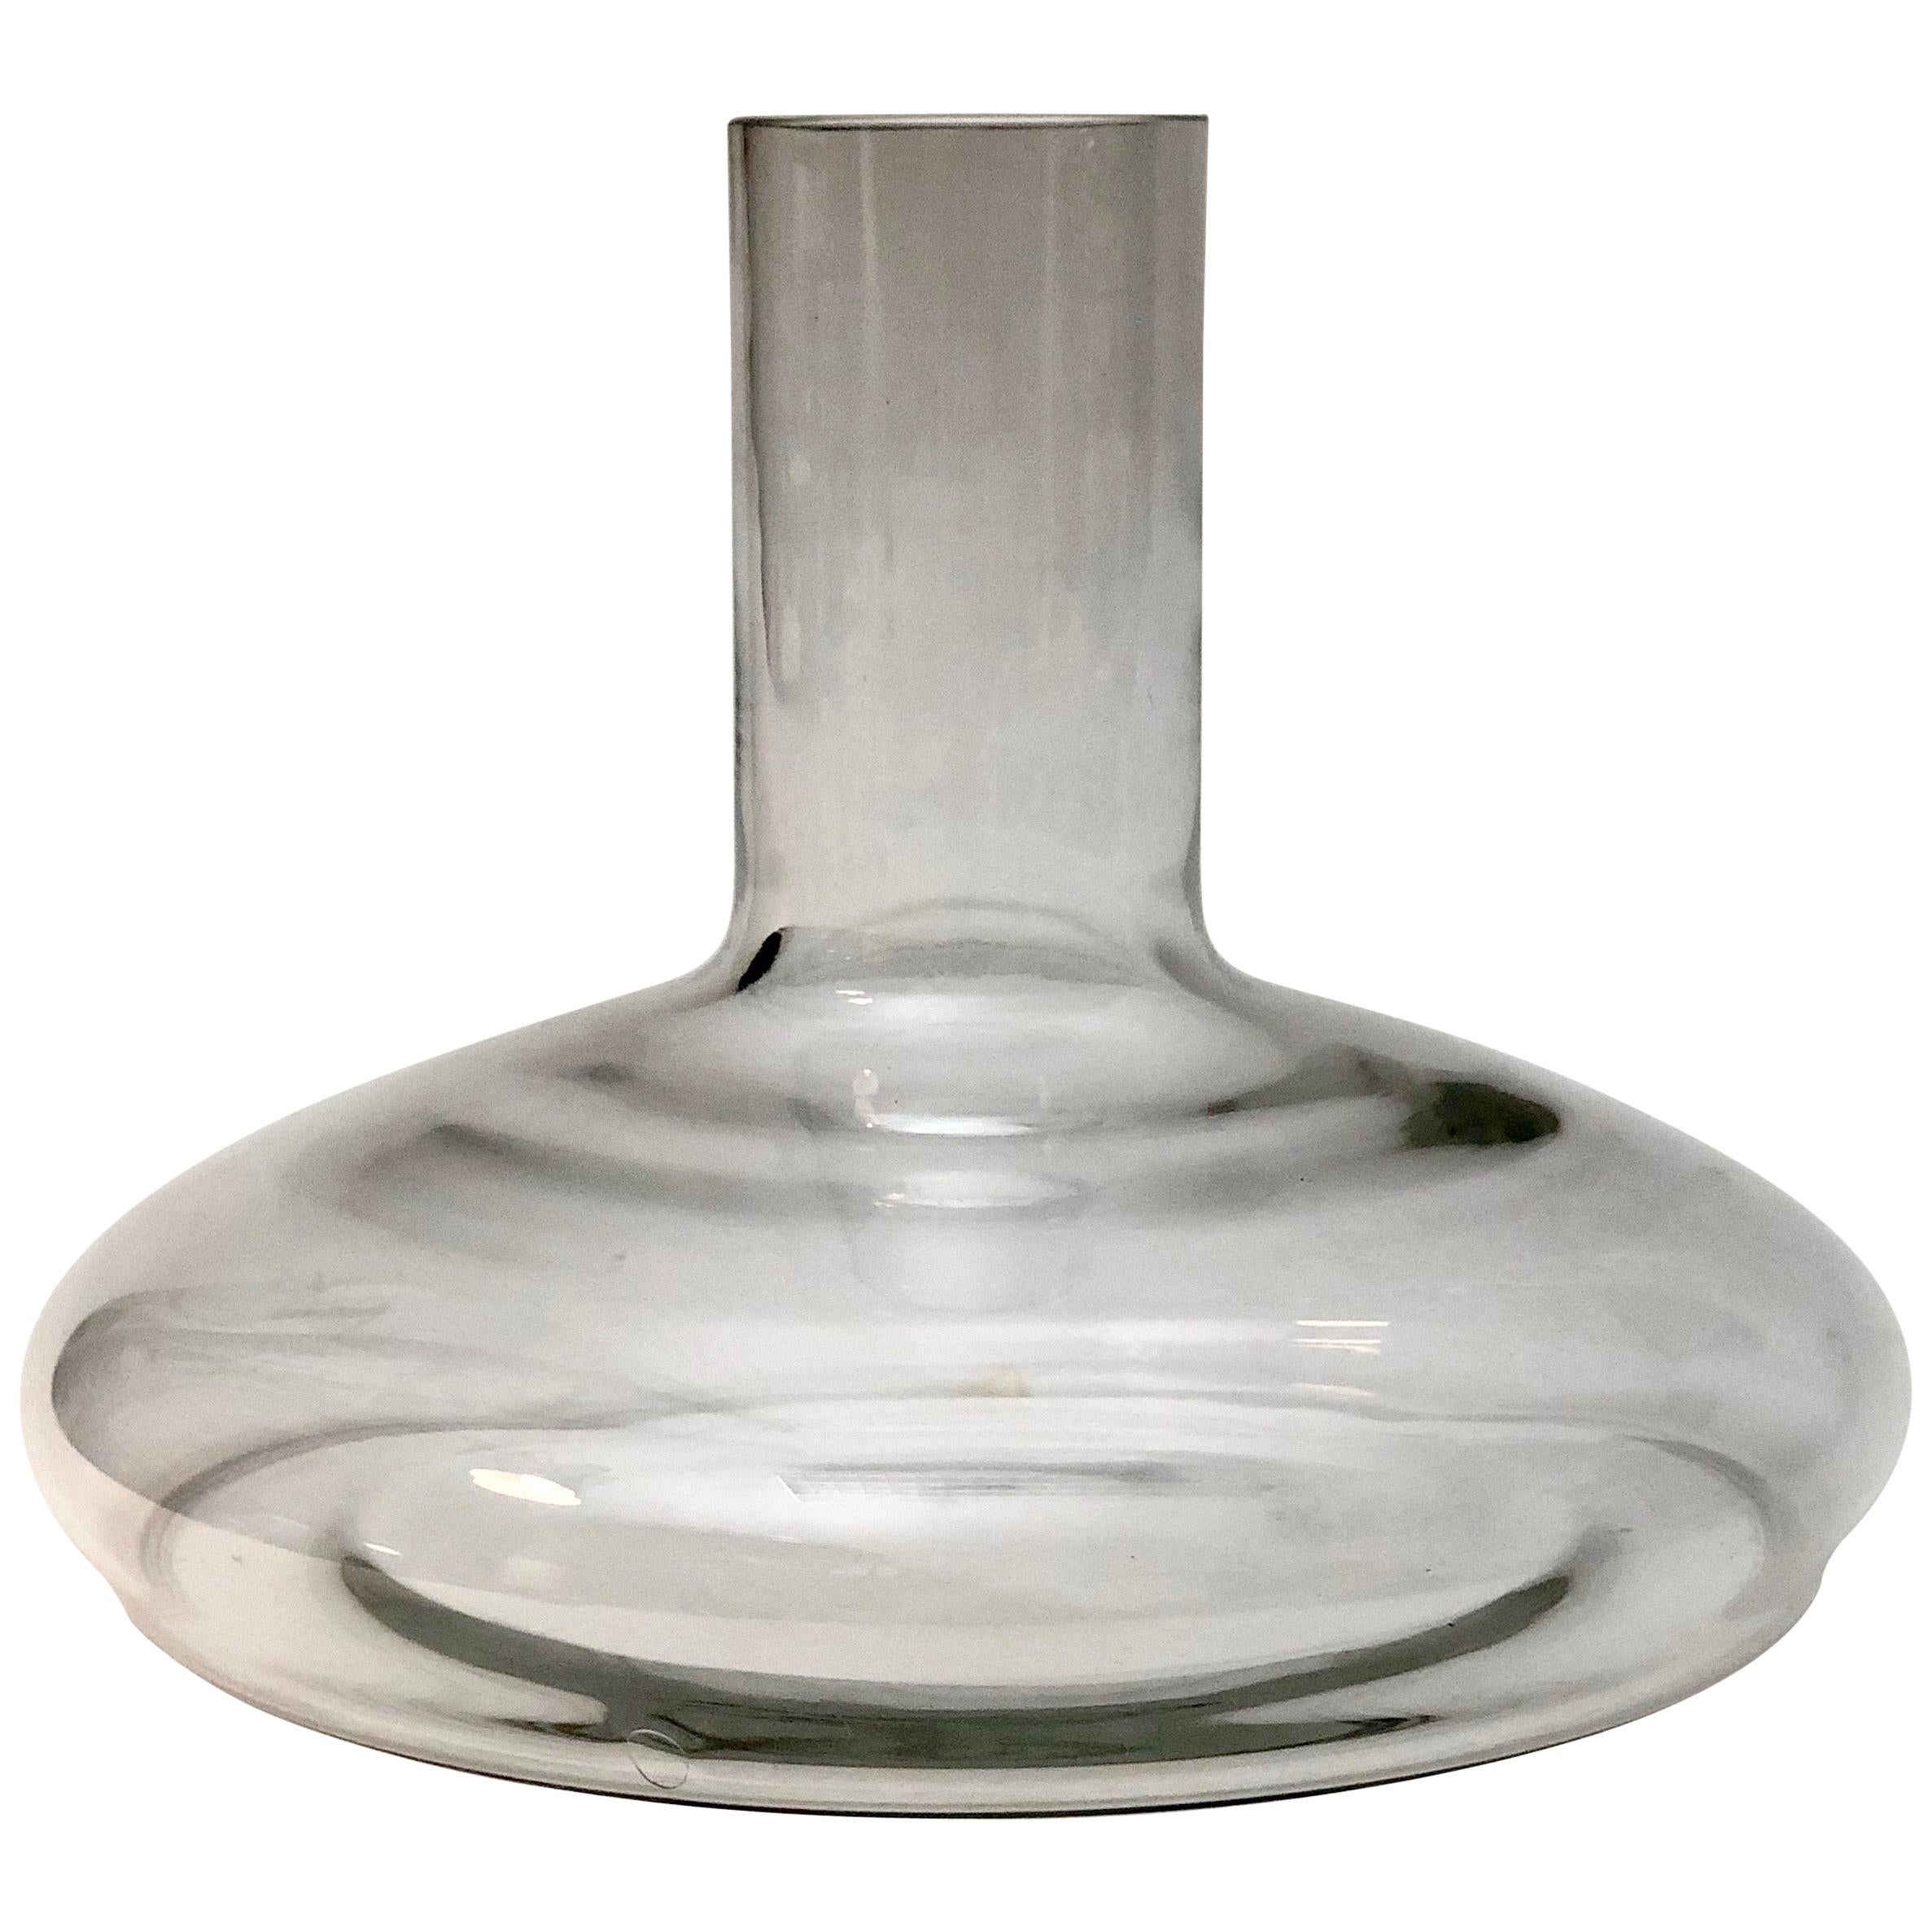 https://a.1stdibscdn.com/midcentury-glass-vase-from-carl-aubock-1950s-for-sale/1121189/f_222021121611361130667/22202112_master.jpg